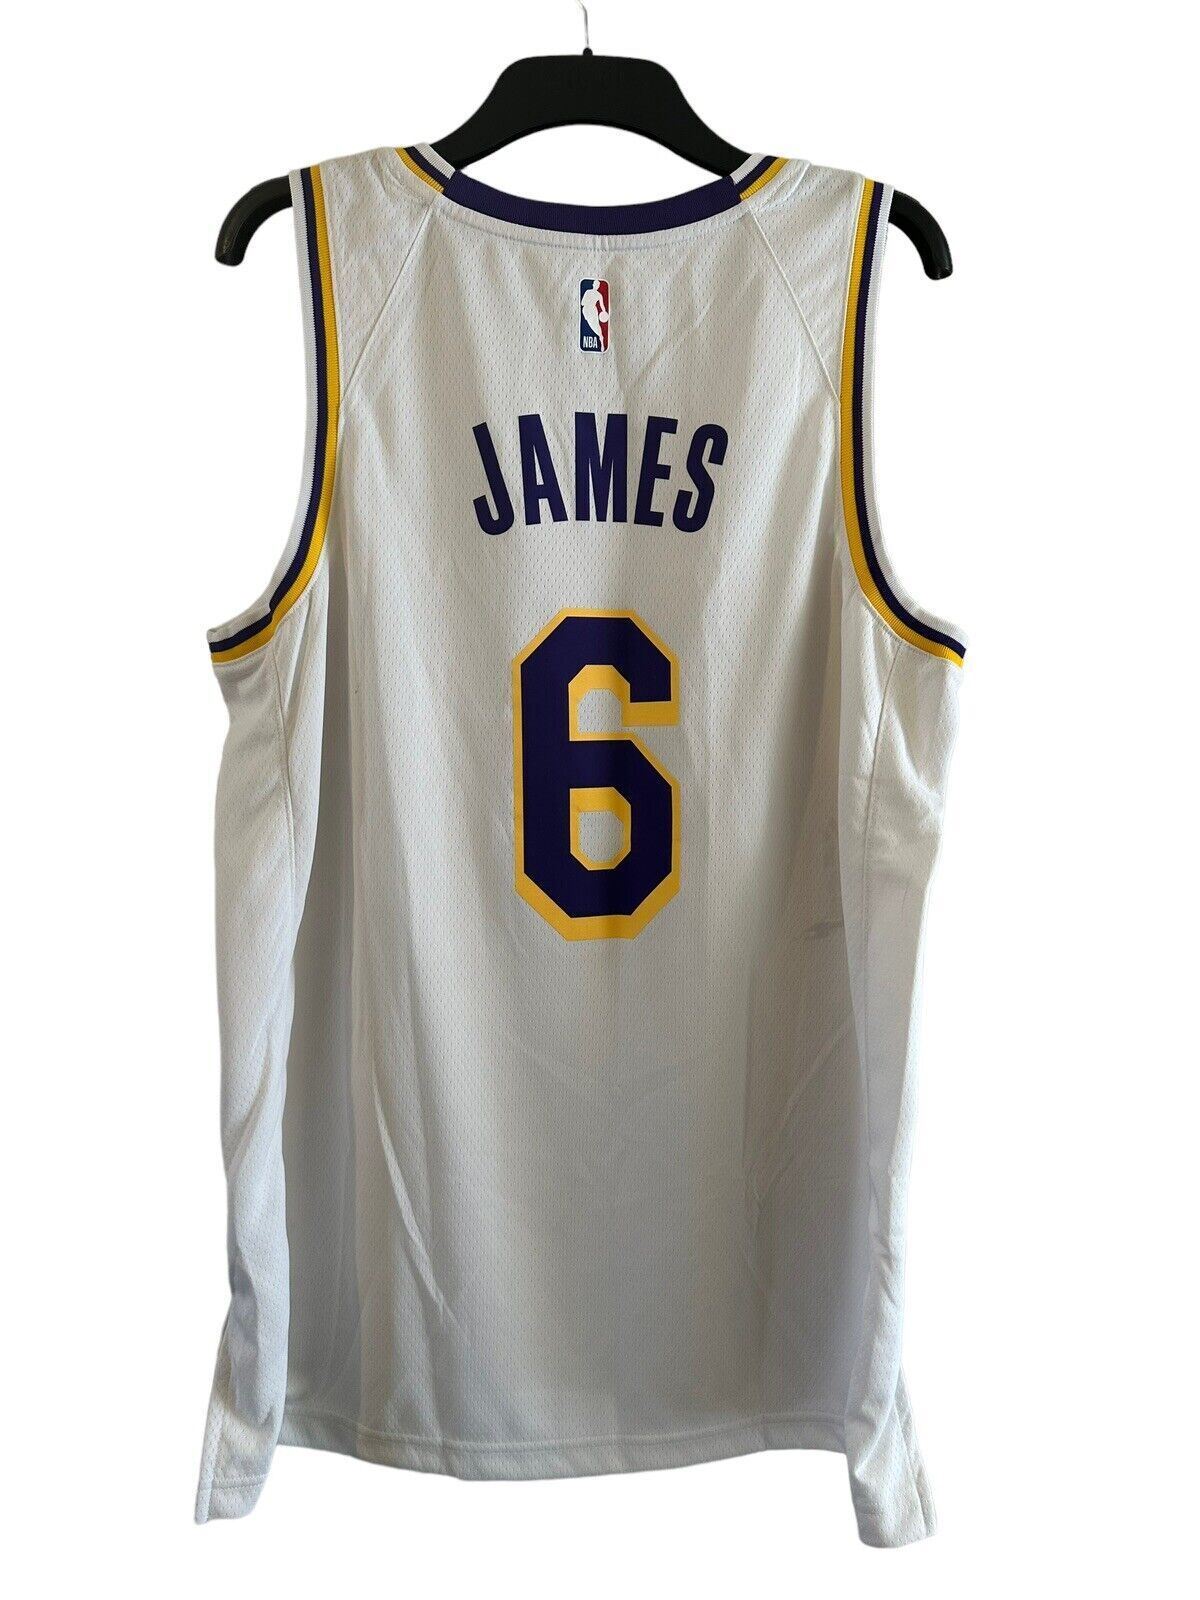 Nike NBA LA Lakers Association Edition Jersey JAMES 6 Men’s XL *DF*